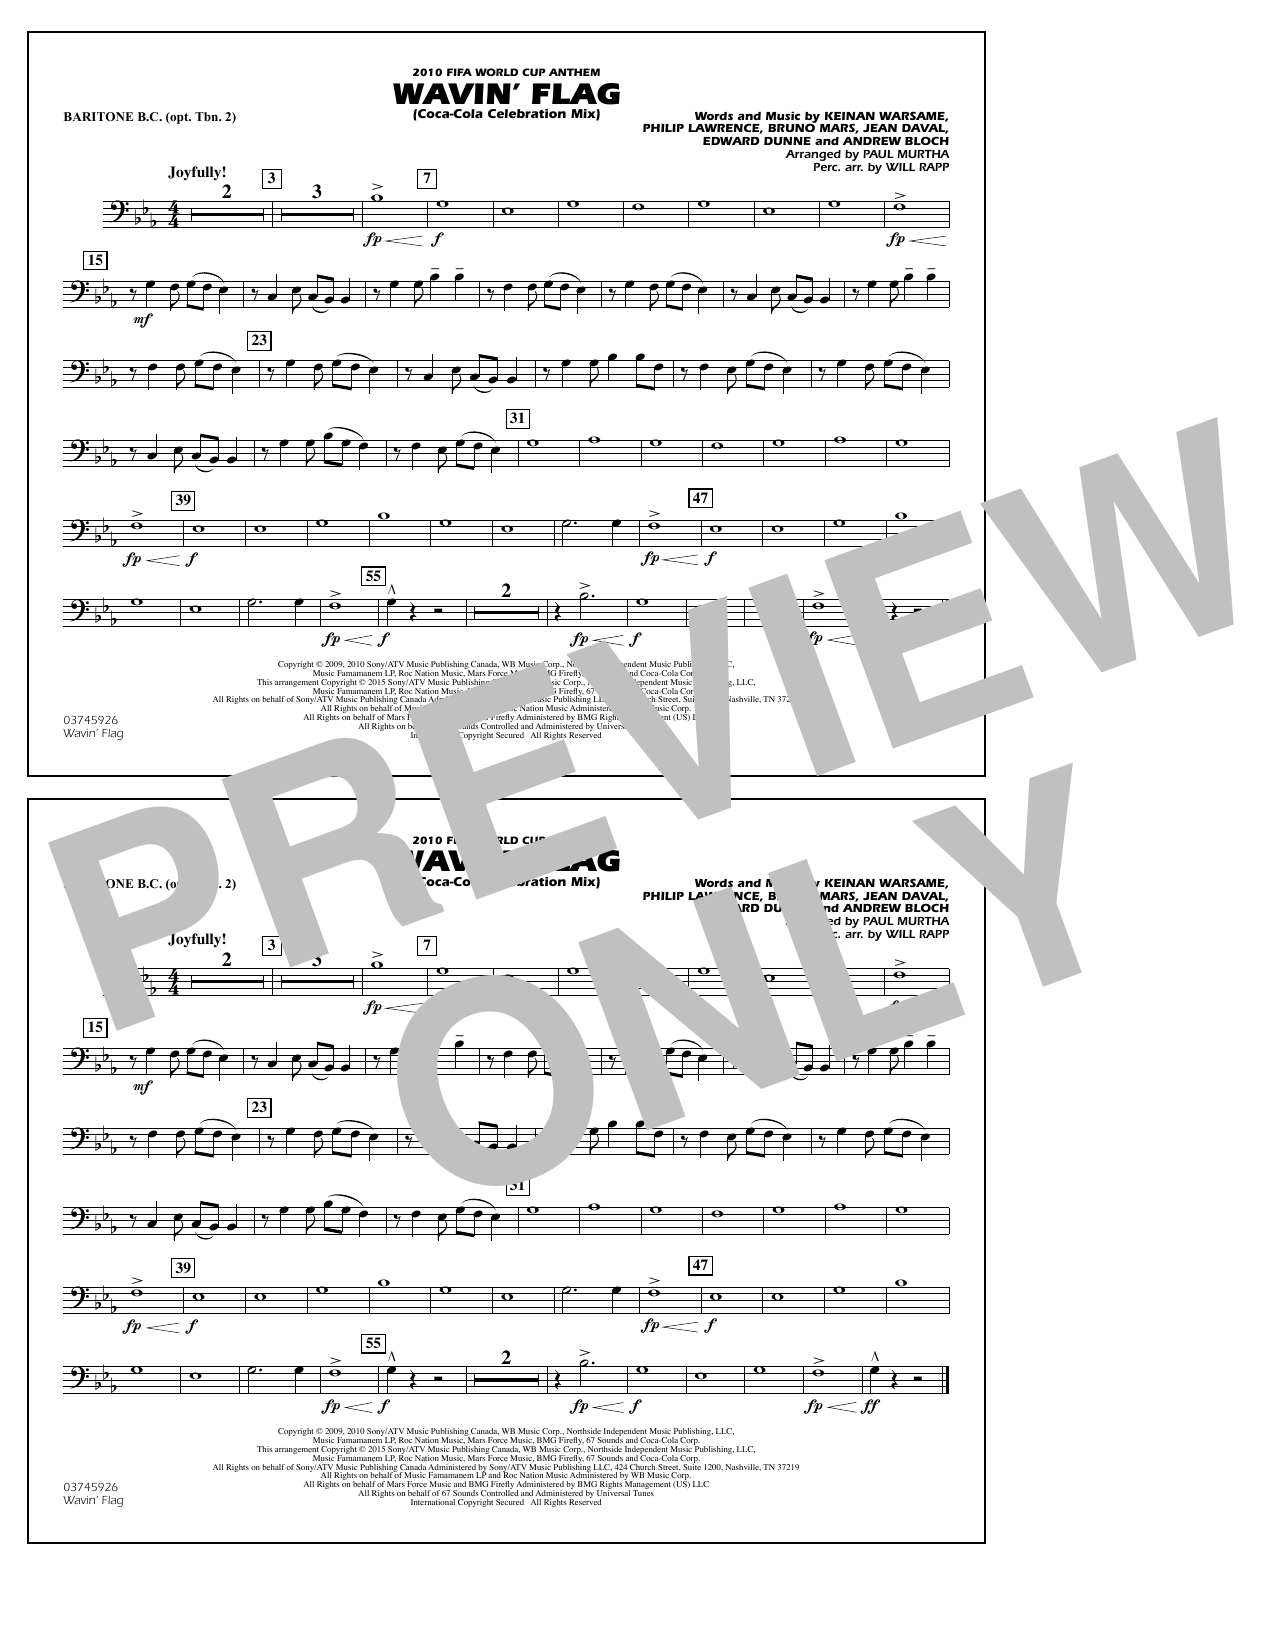 Paul Murtha Wavin' Flag - Baritone B.C. (Opt. Tbn. 2) Sheet Music Notes & Chords for Marching Band - Download or Print PDF